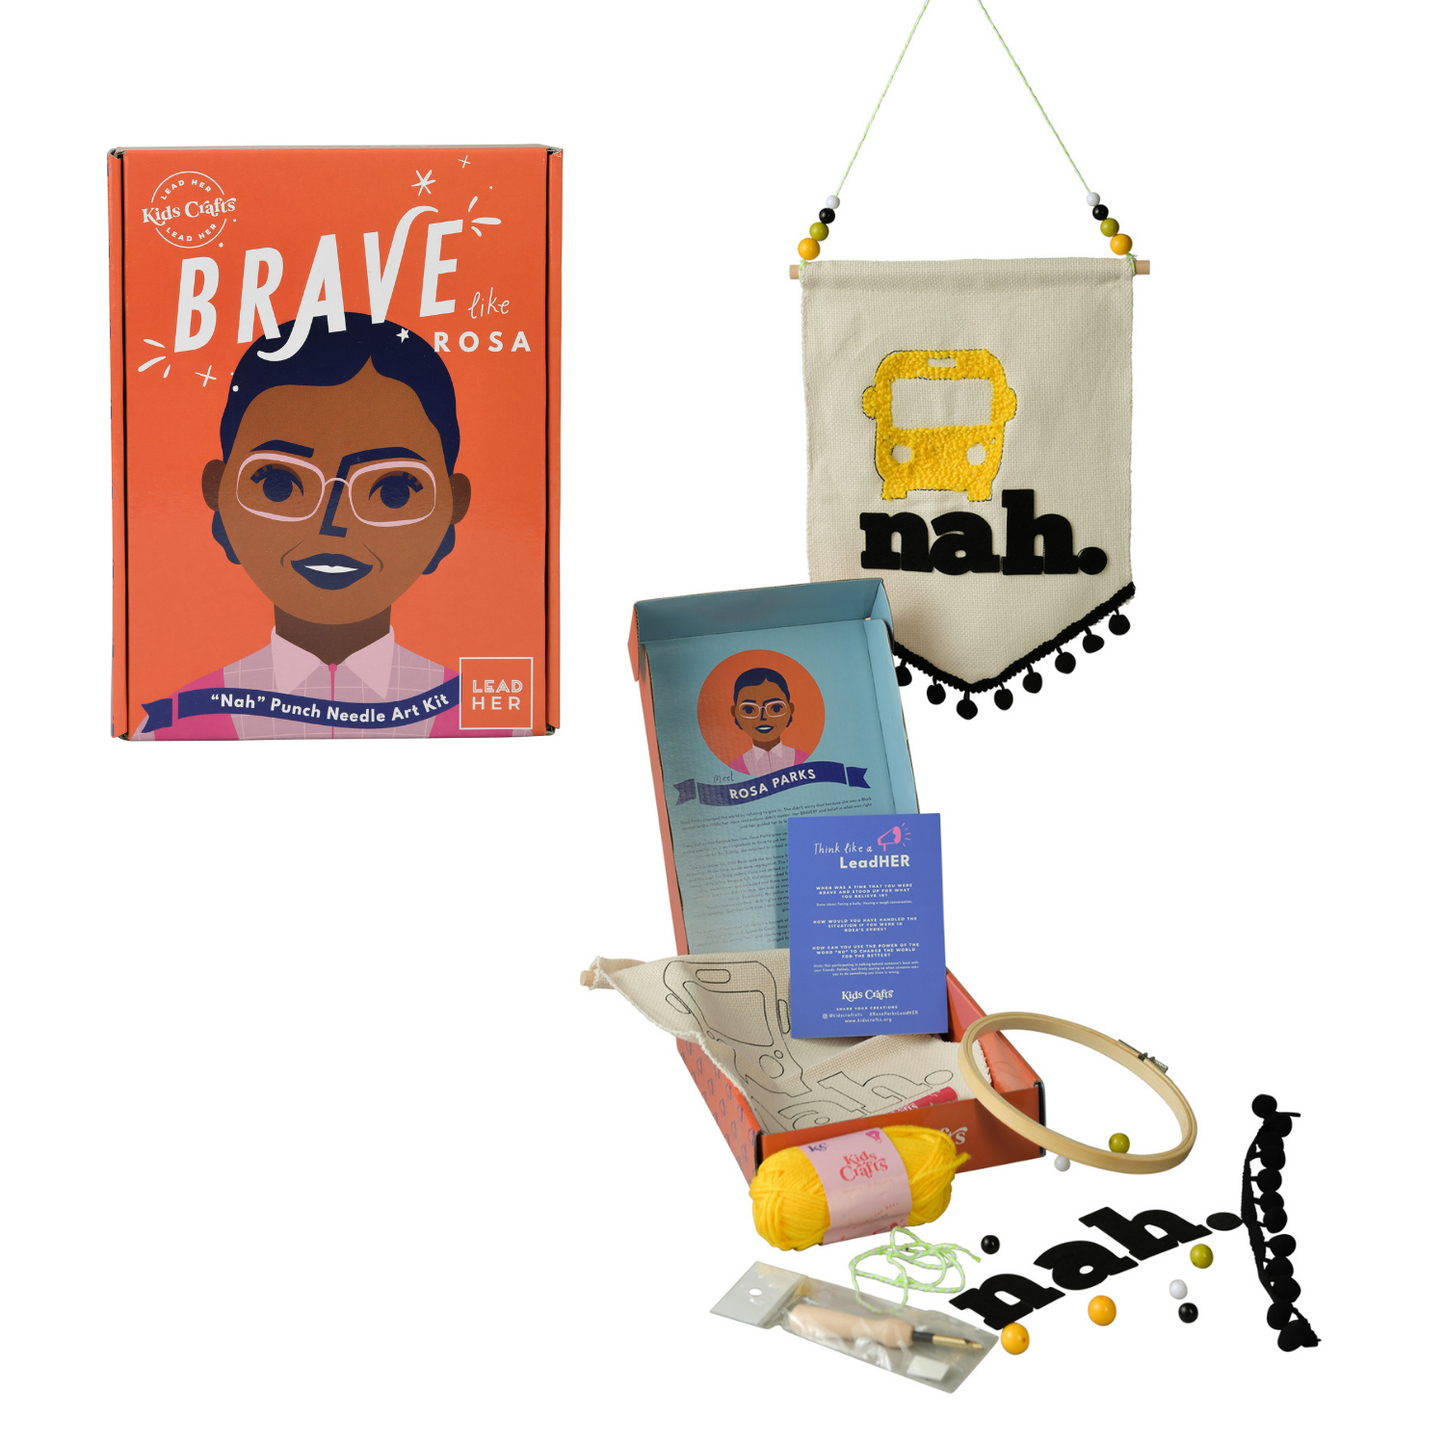 Kids Crafts, LLC. - BRAVE like Rosa: "Nah" Punch Needle Craft Kit